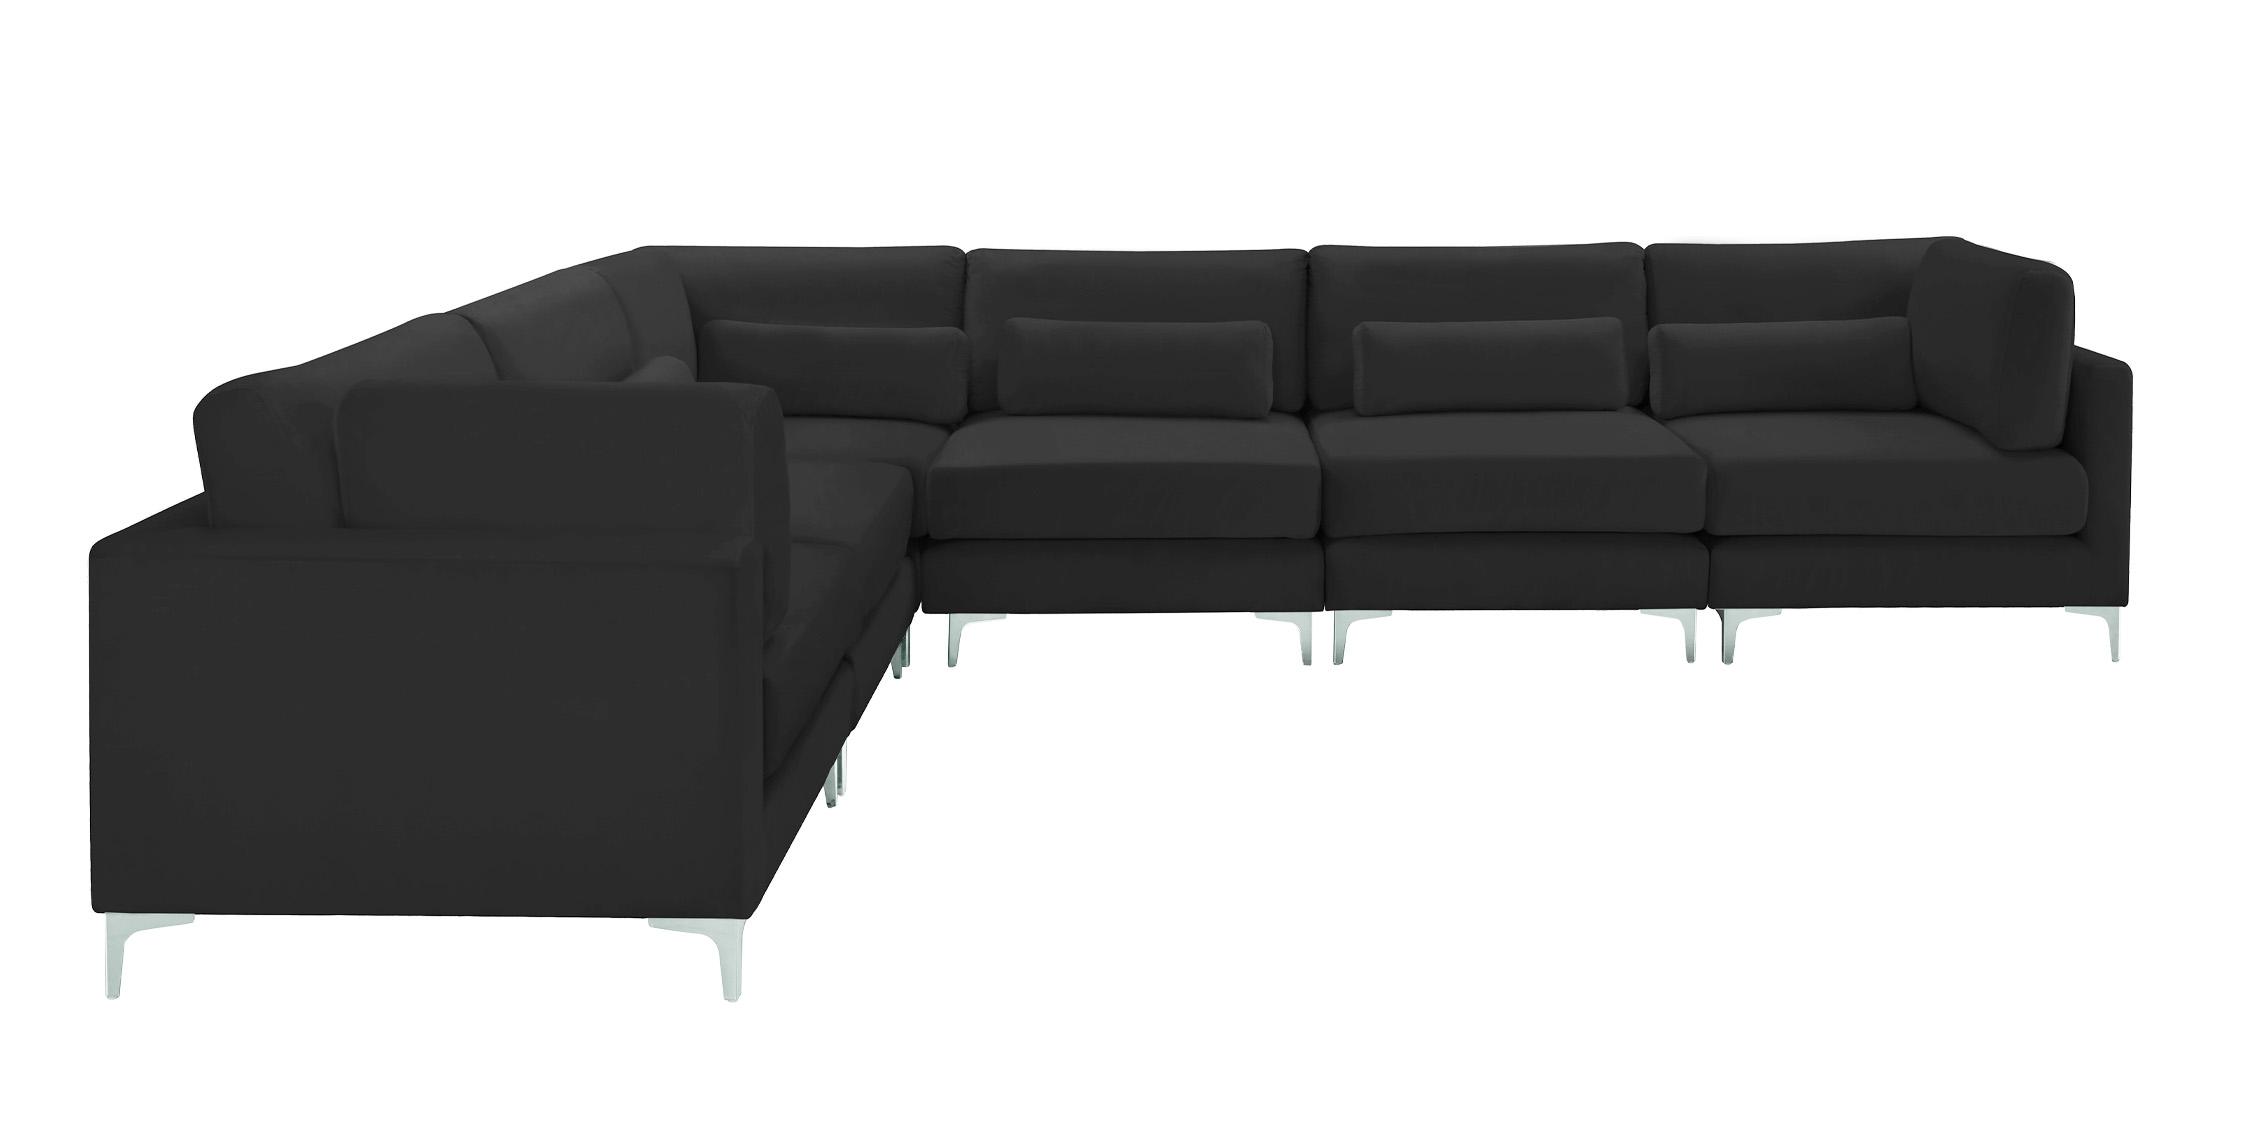 

    
Meridian Furniture JULIA 605Black-Sec6A Modular Sectional Sofa Black 605Black-Sec6A
